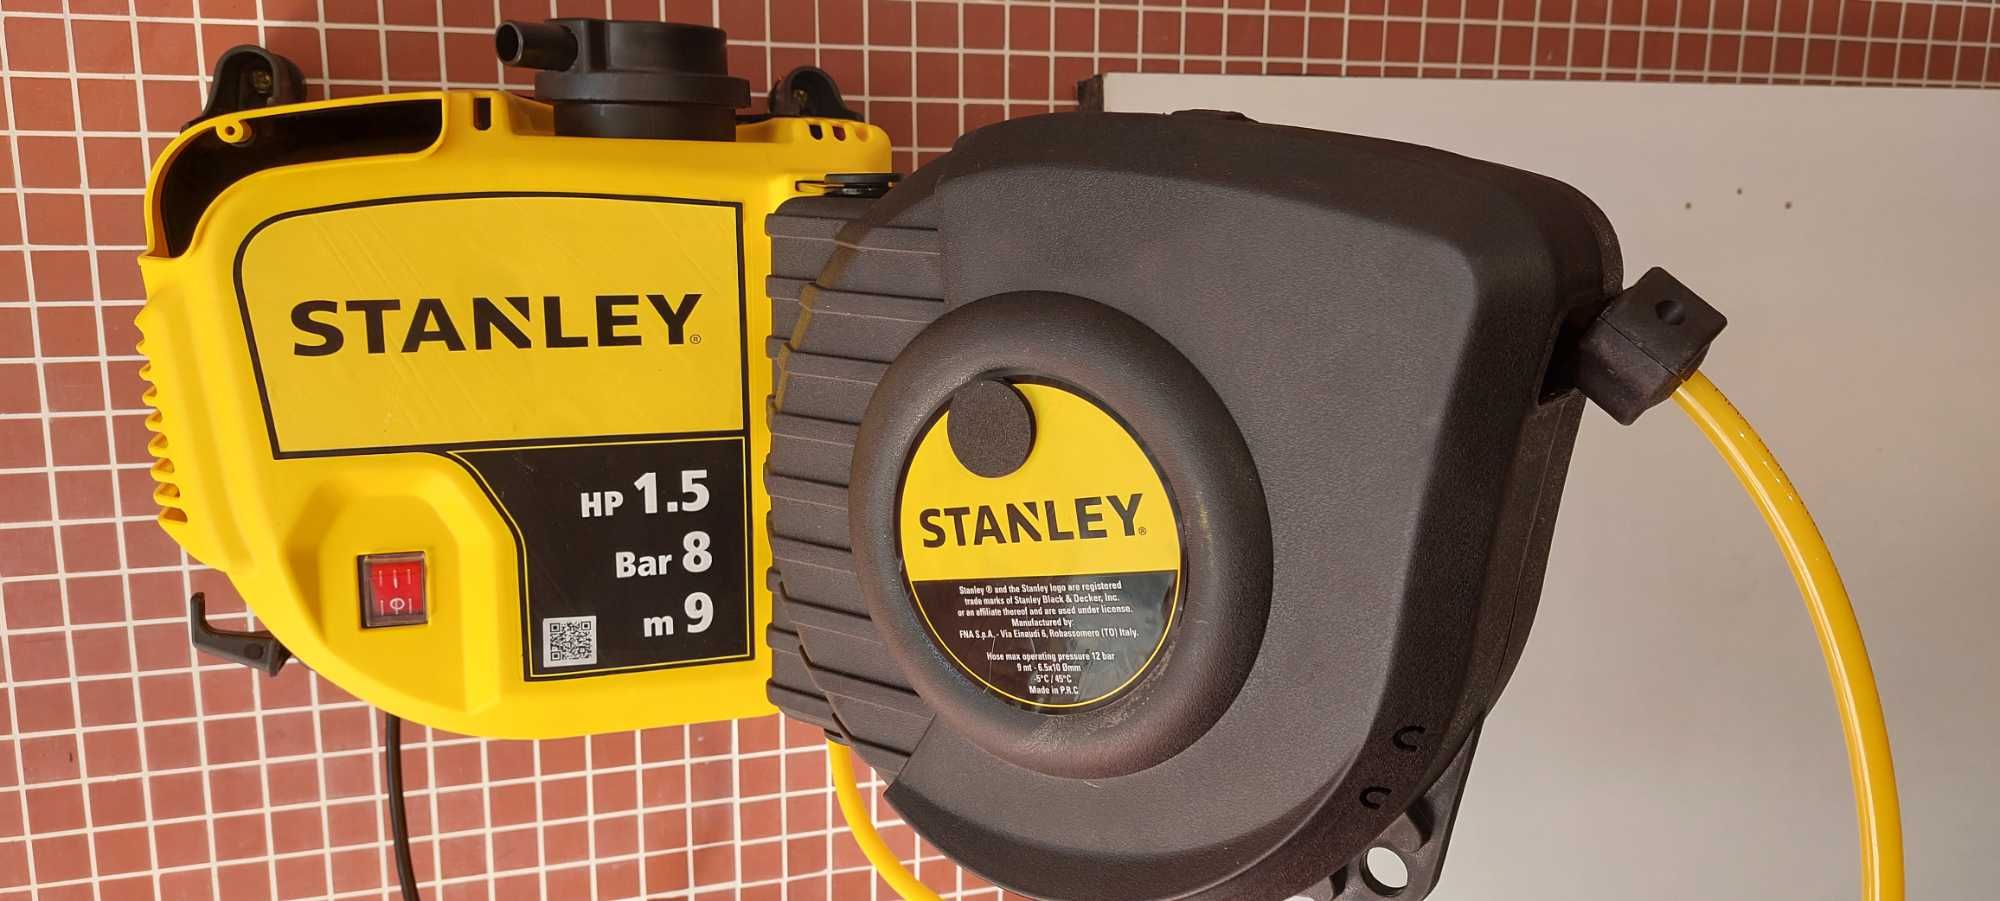 STANLEY, Compressor de Parede 1.5Hp 8Bar